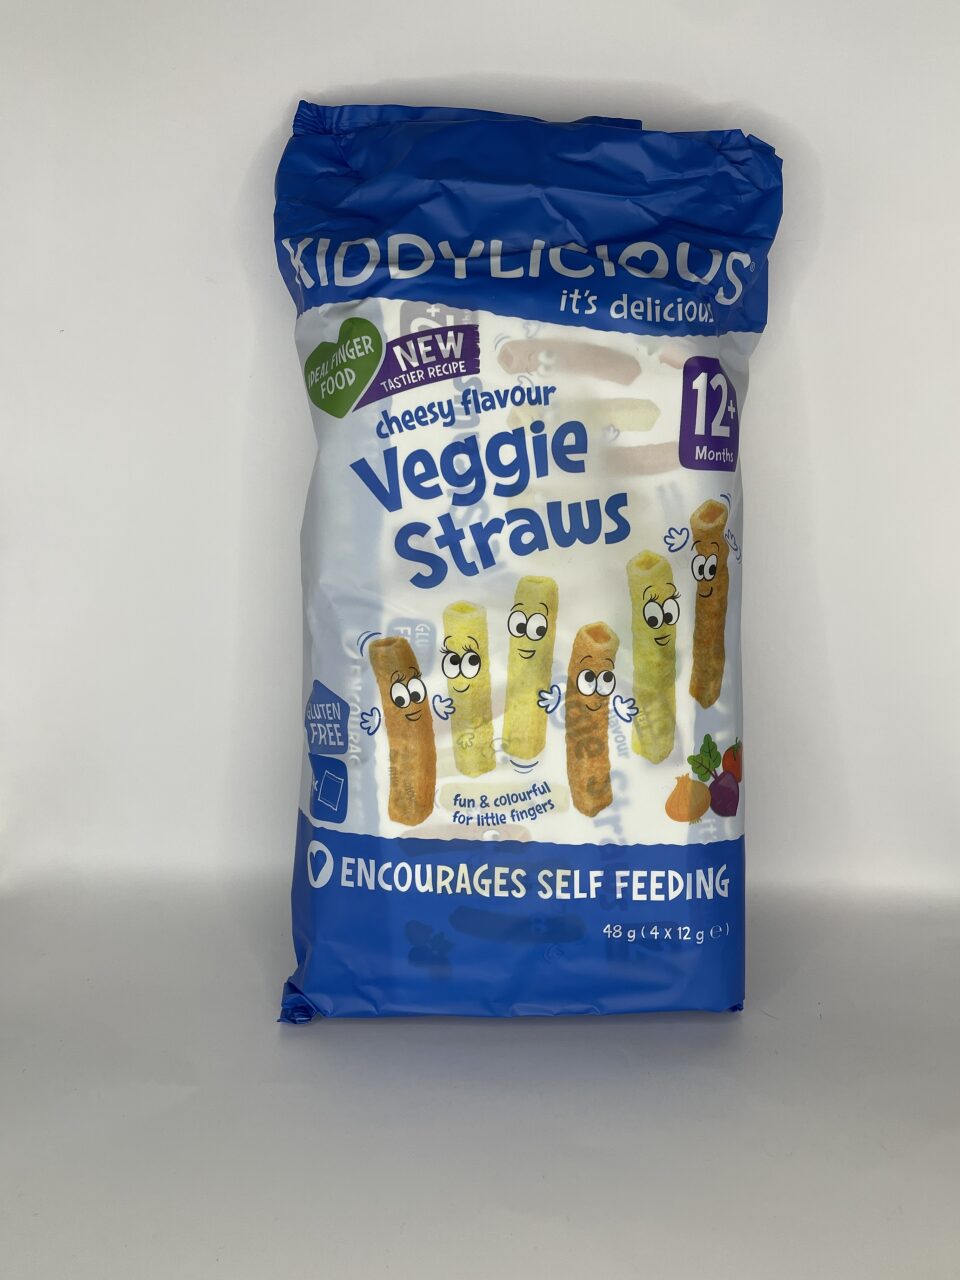 KiddyLicious Cheesy Flavour Veggie Straws Multipack(4x12g) 48g